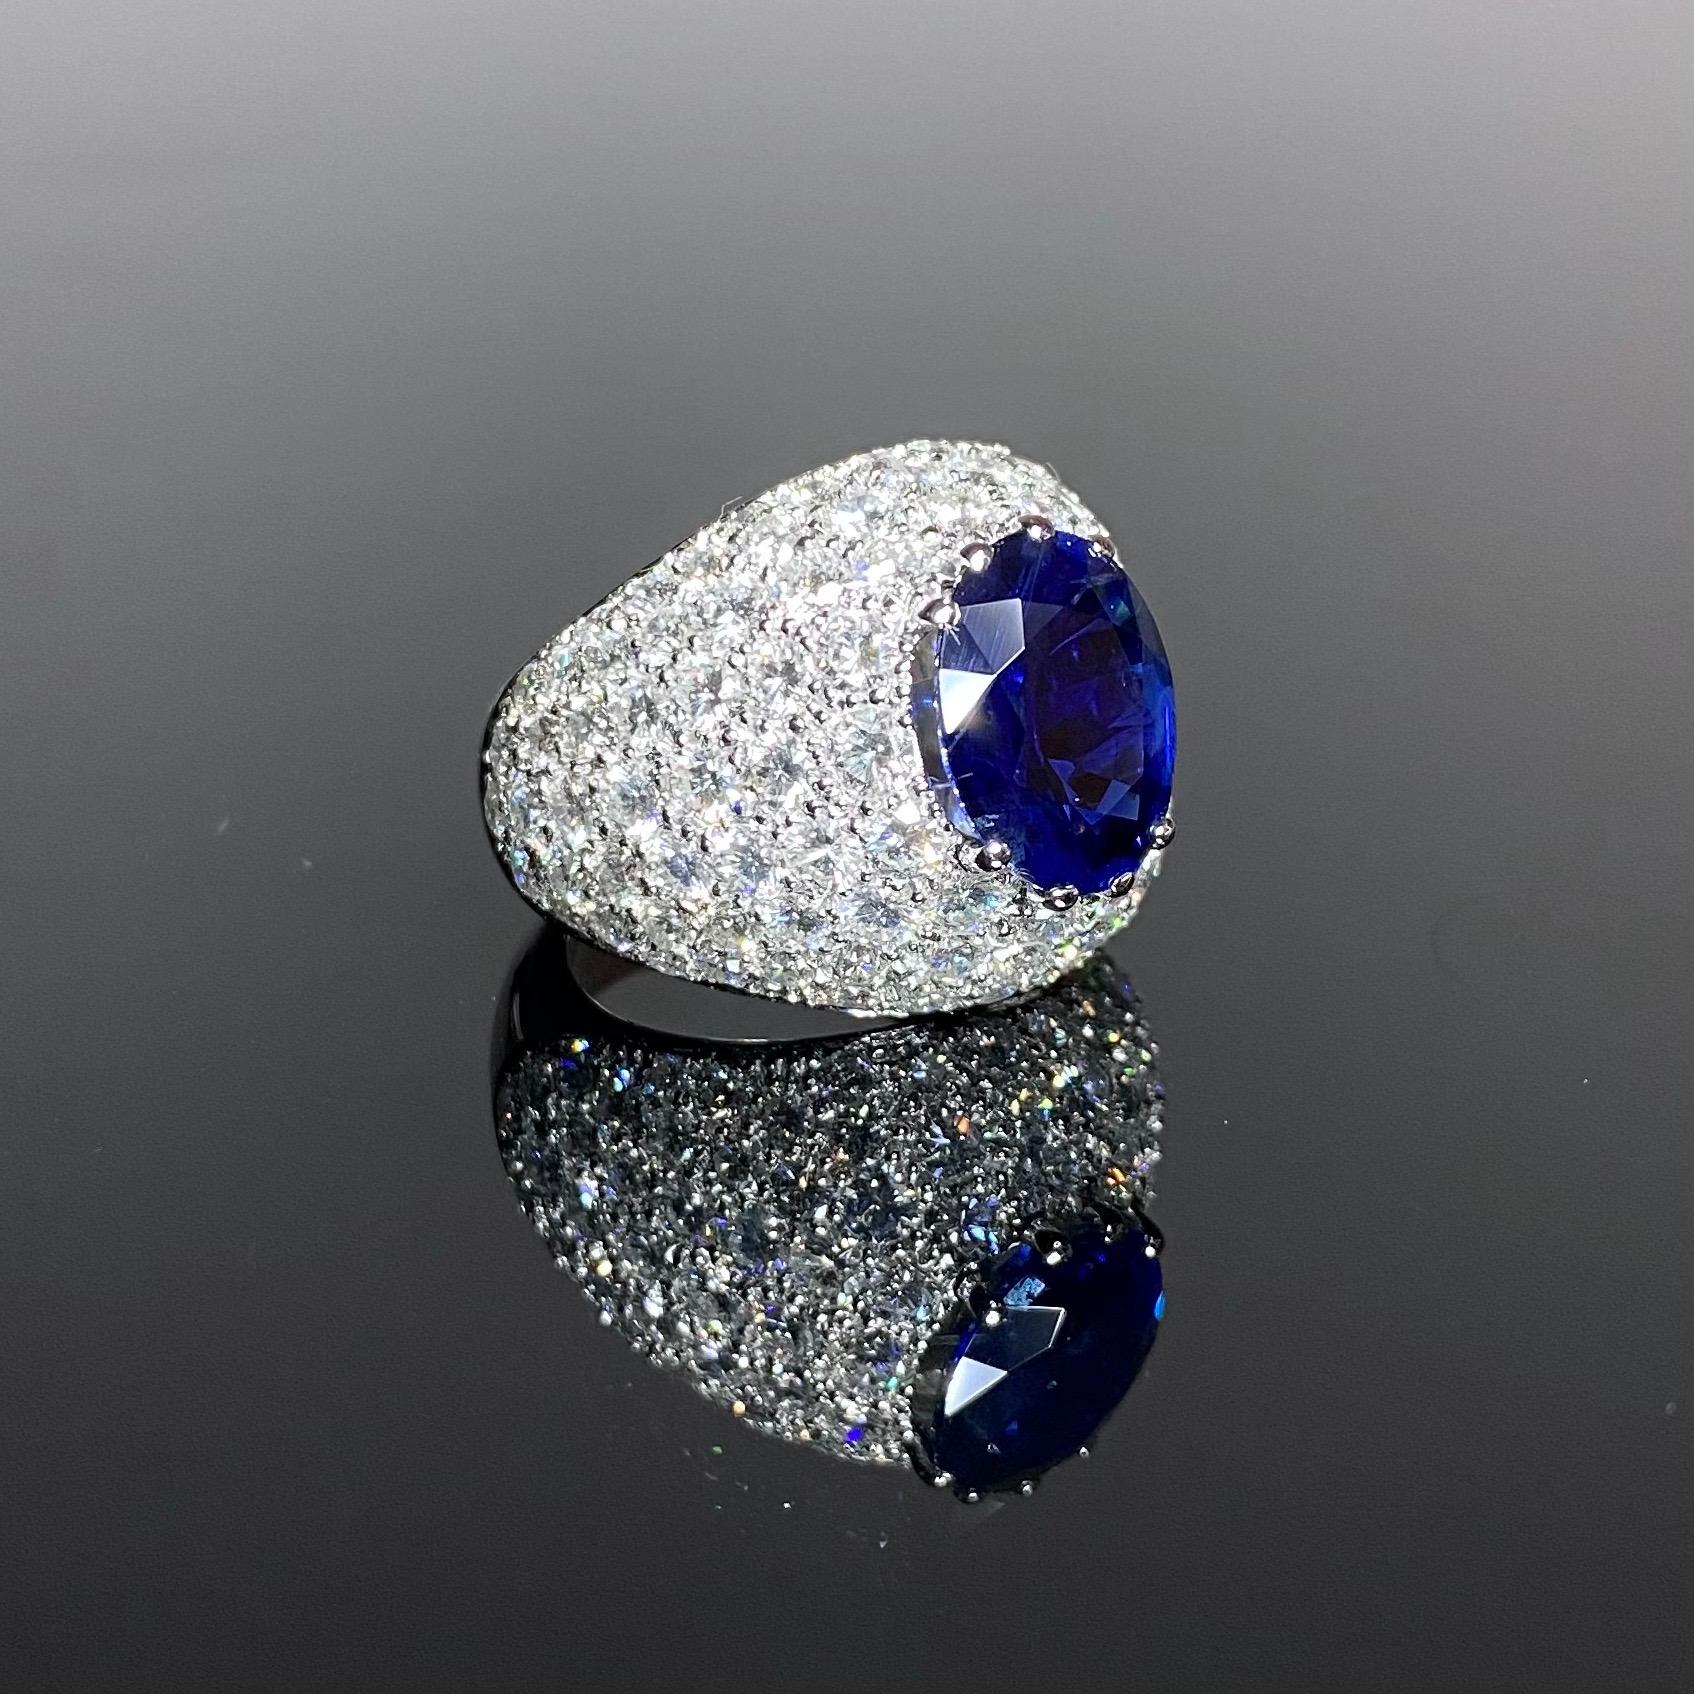 Contemporary Royal Blue Ceylon Sapphire Diamond Cocktail Ring 19.2 Karat White Gold 2010s For Sale